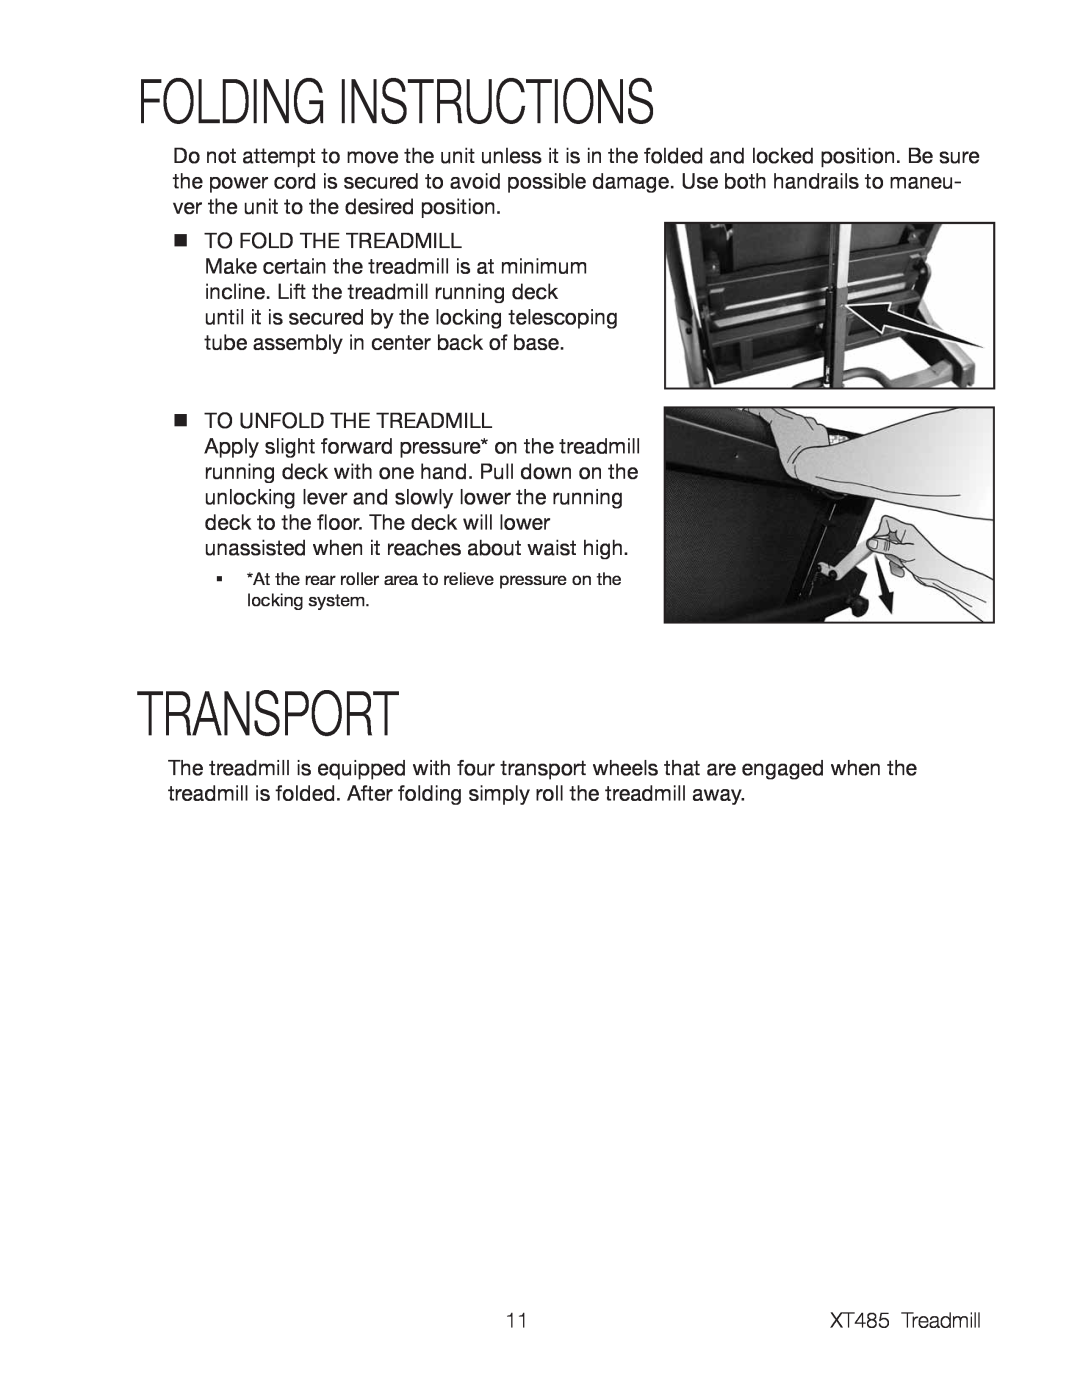 Spirit XT485 owner manual Folding Instructions, Transport 